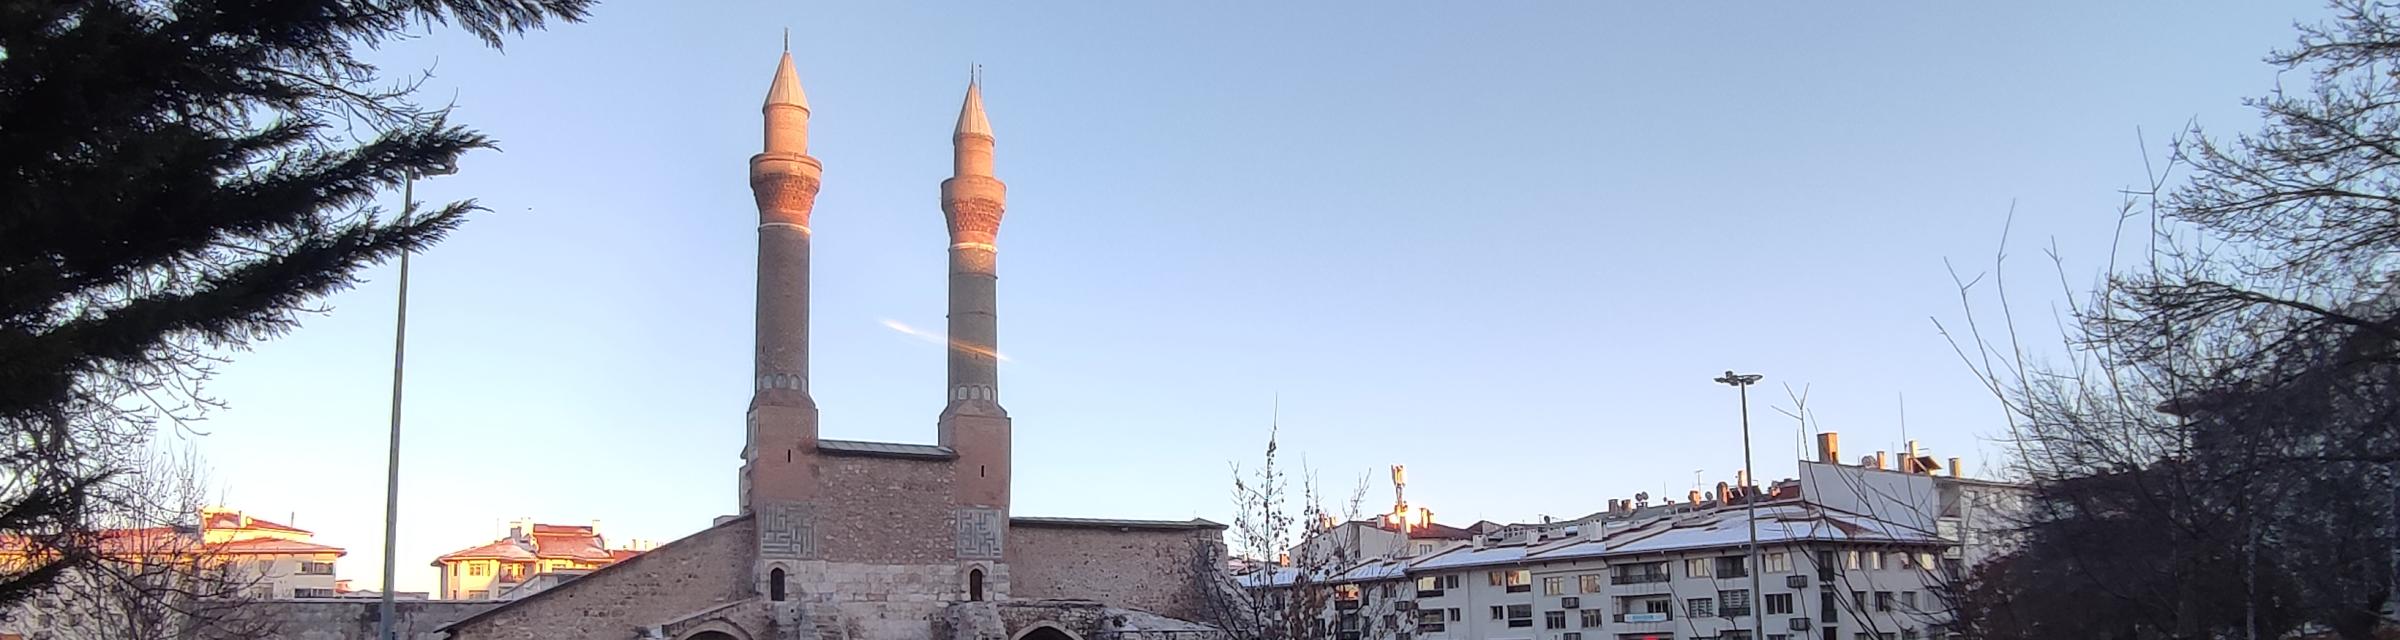 Vecchia moskea in Turkia